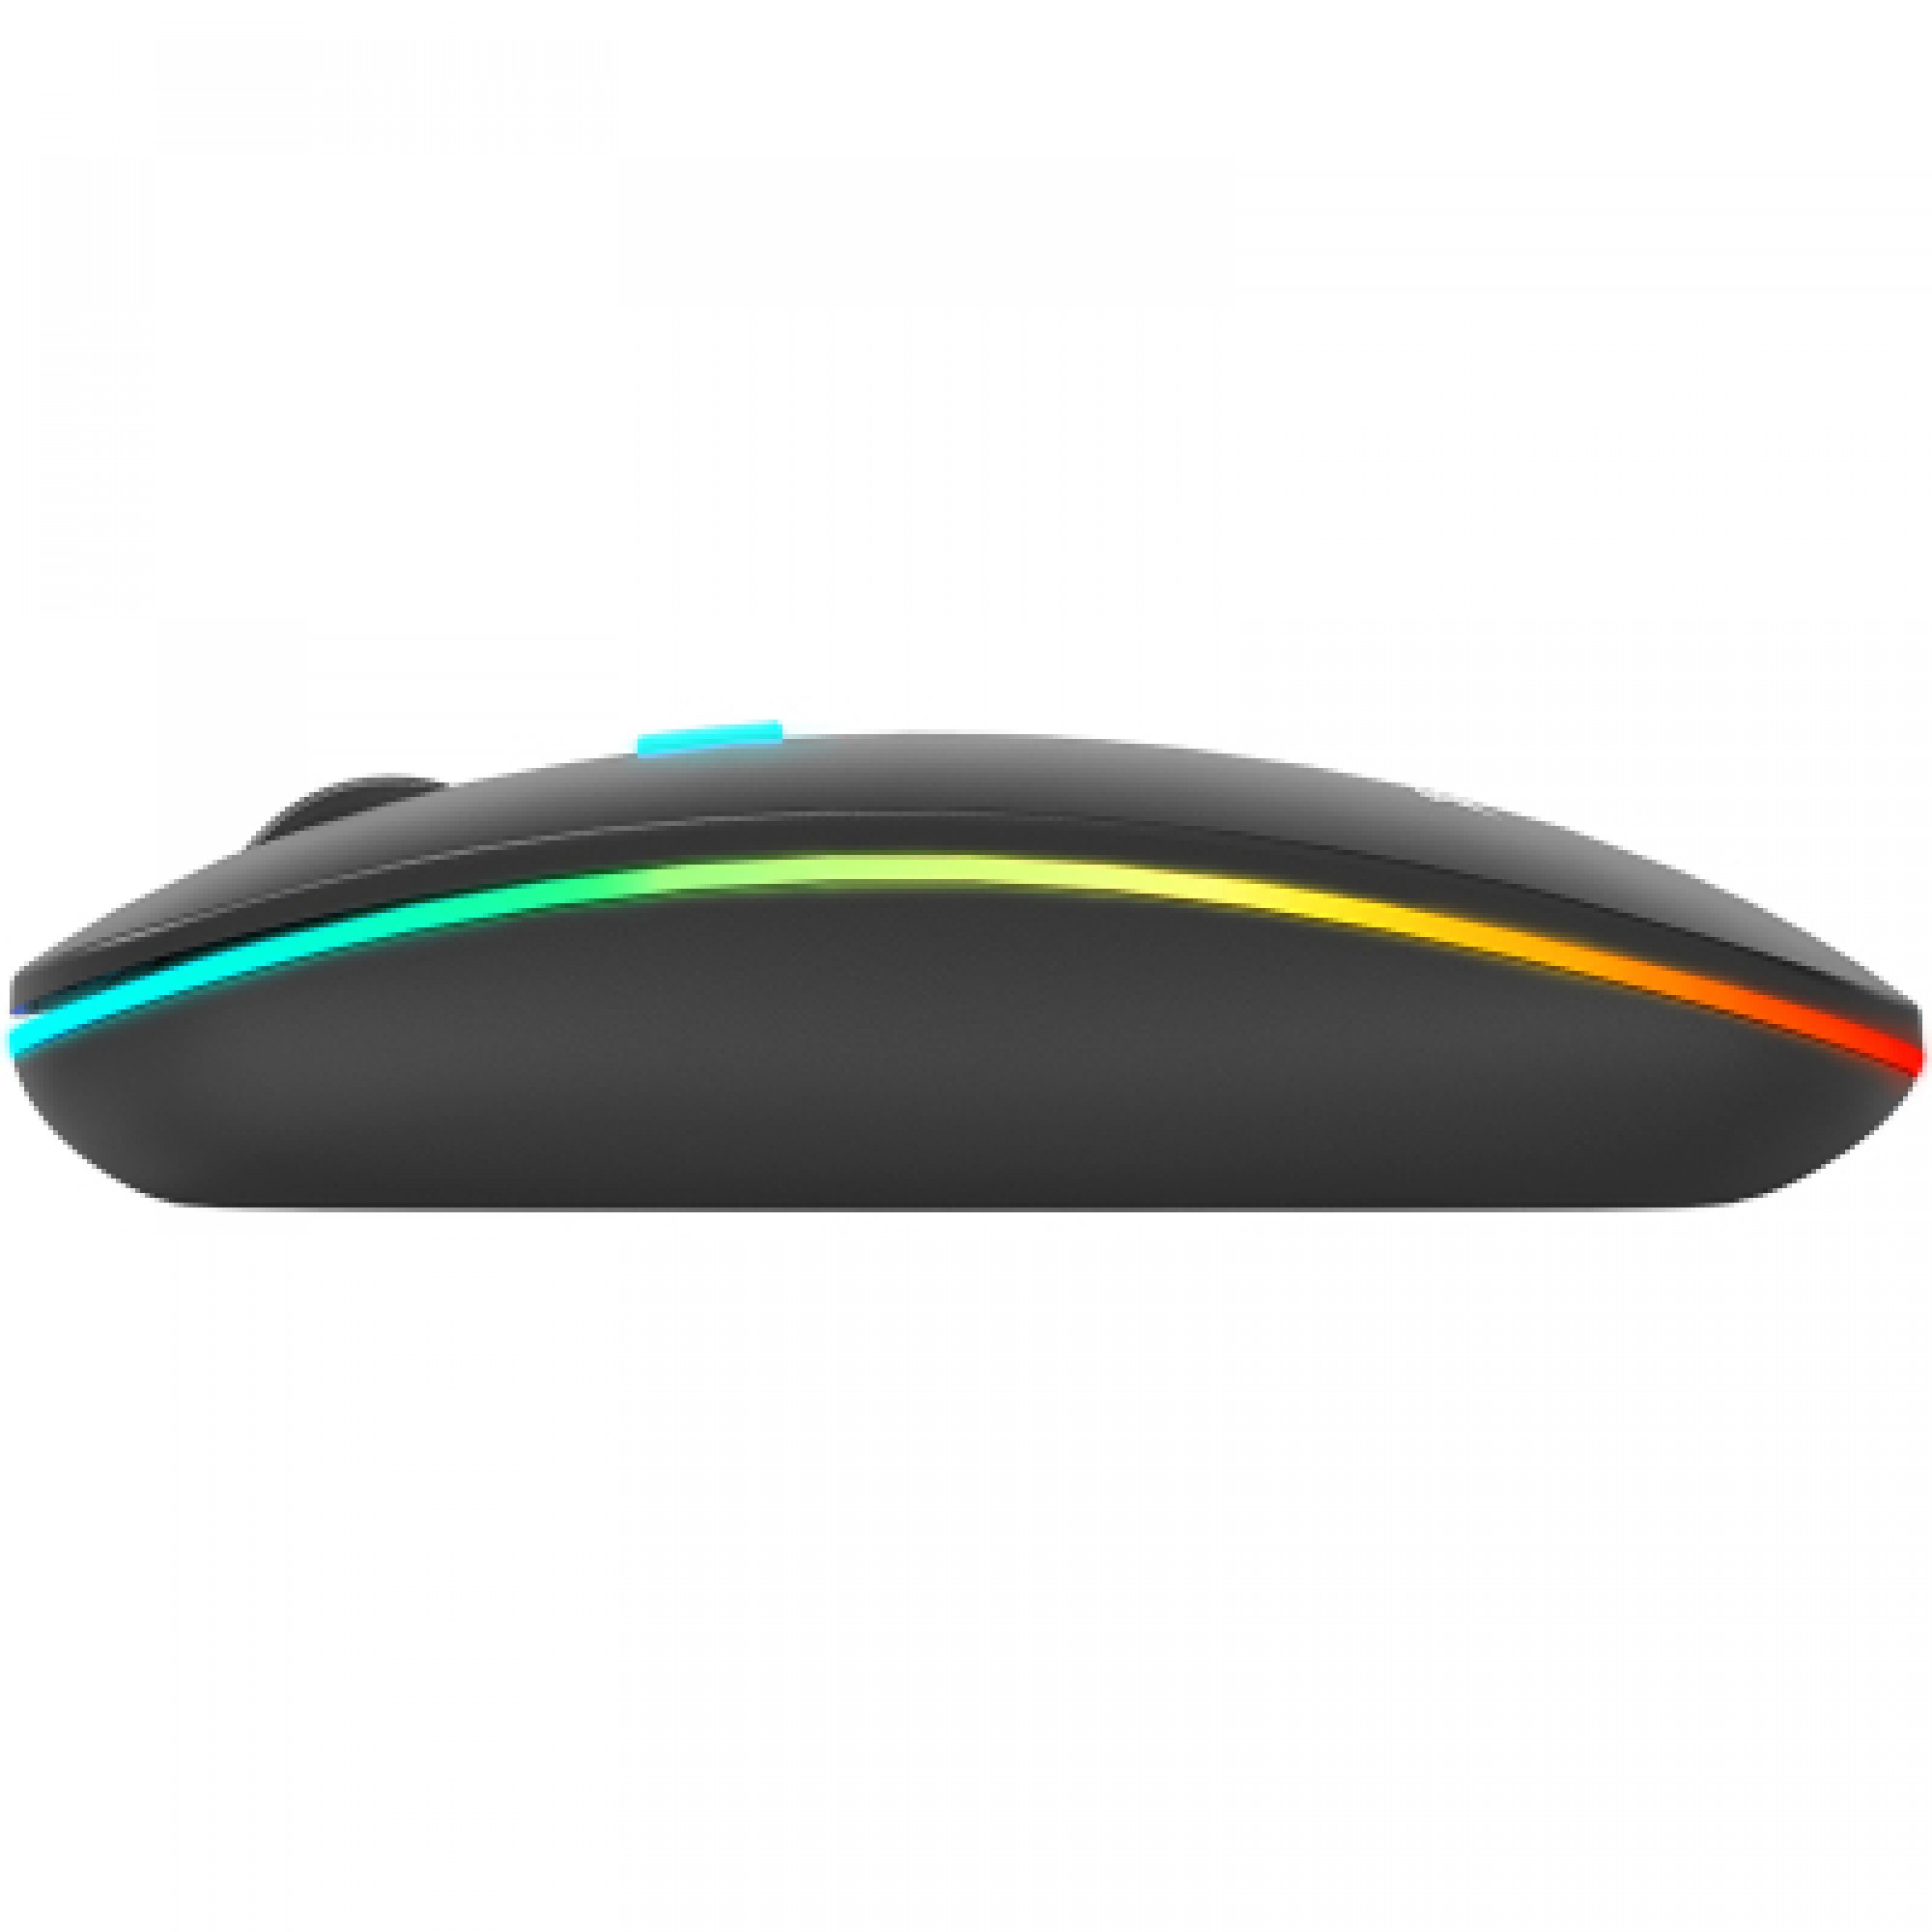 Мишка Xtrike ME GW-113 Bluetooth RGB Black (GW-113)